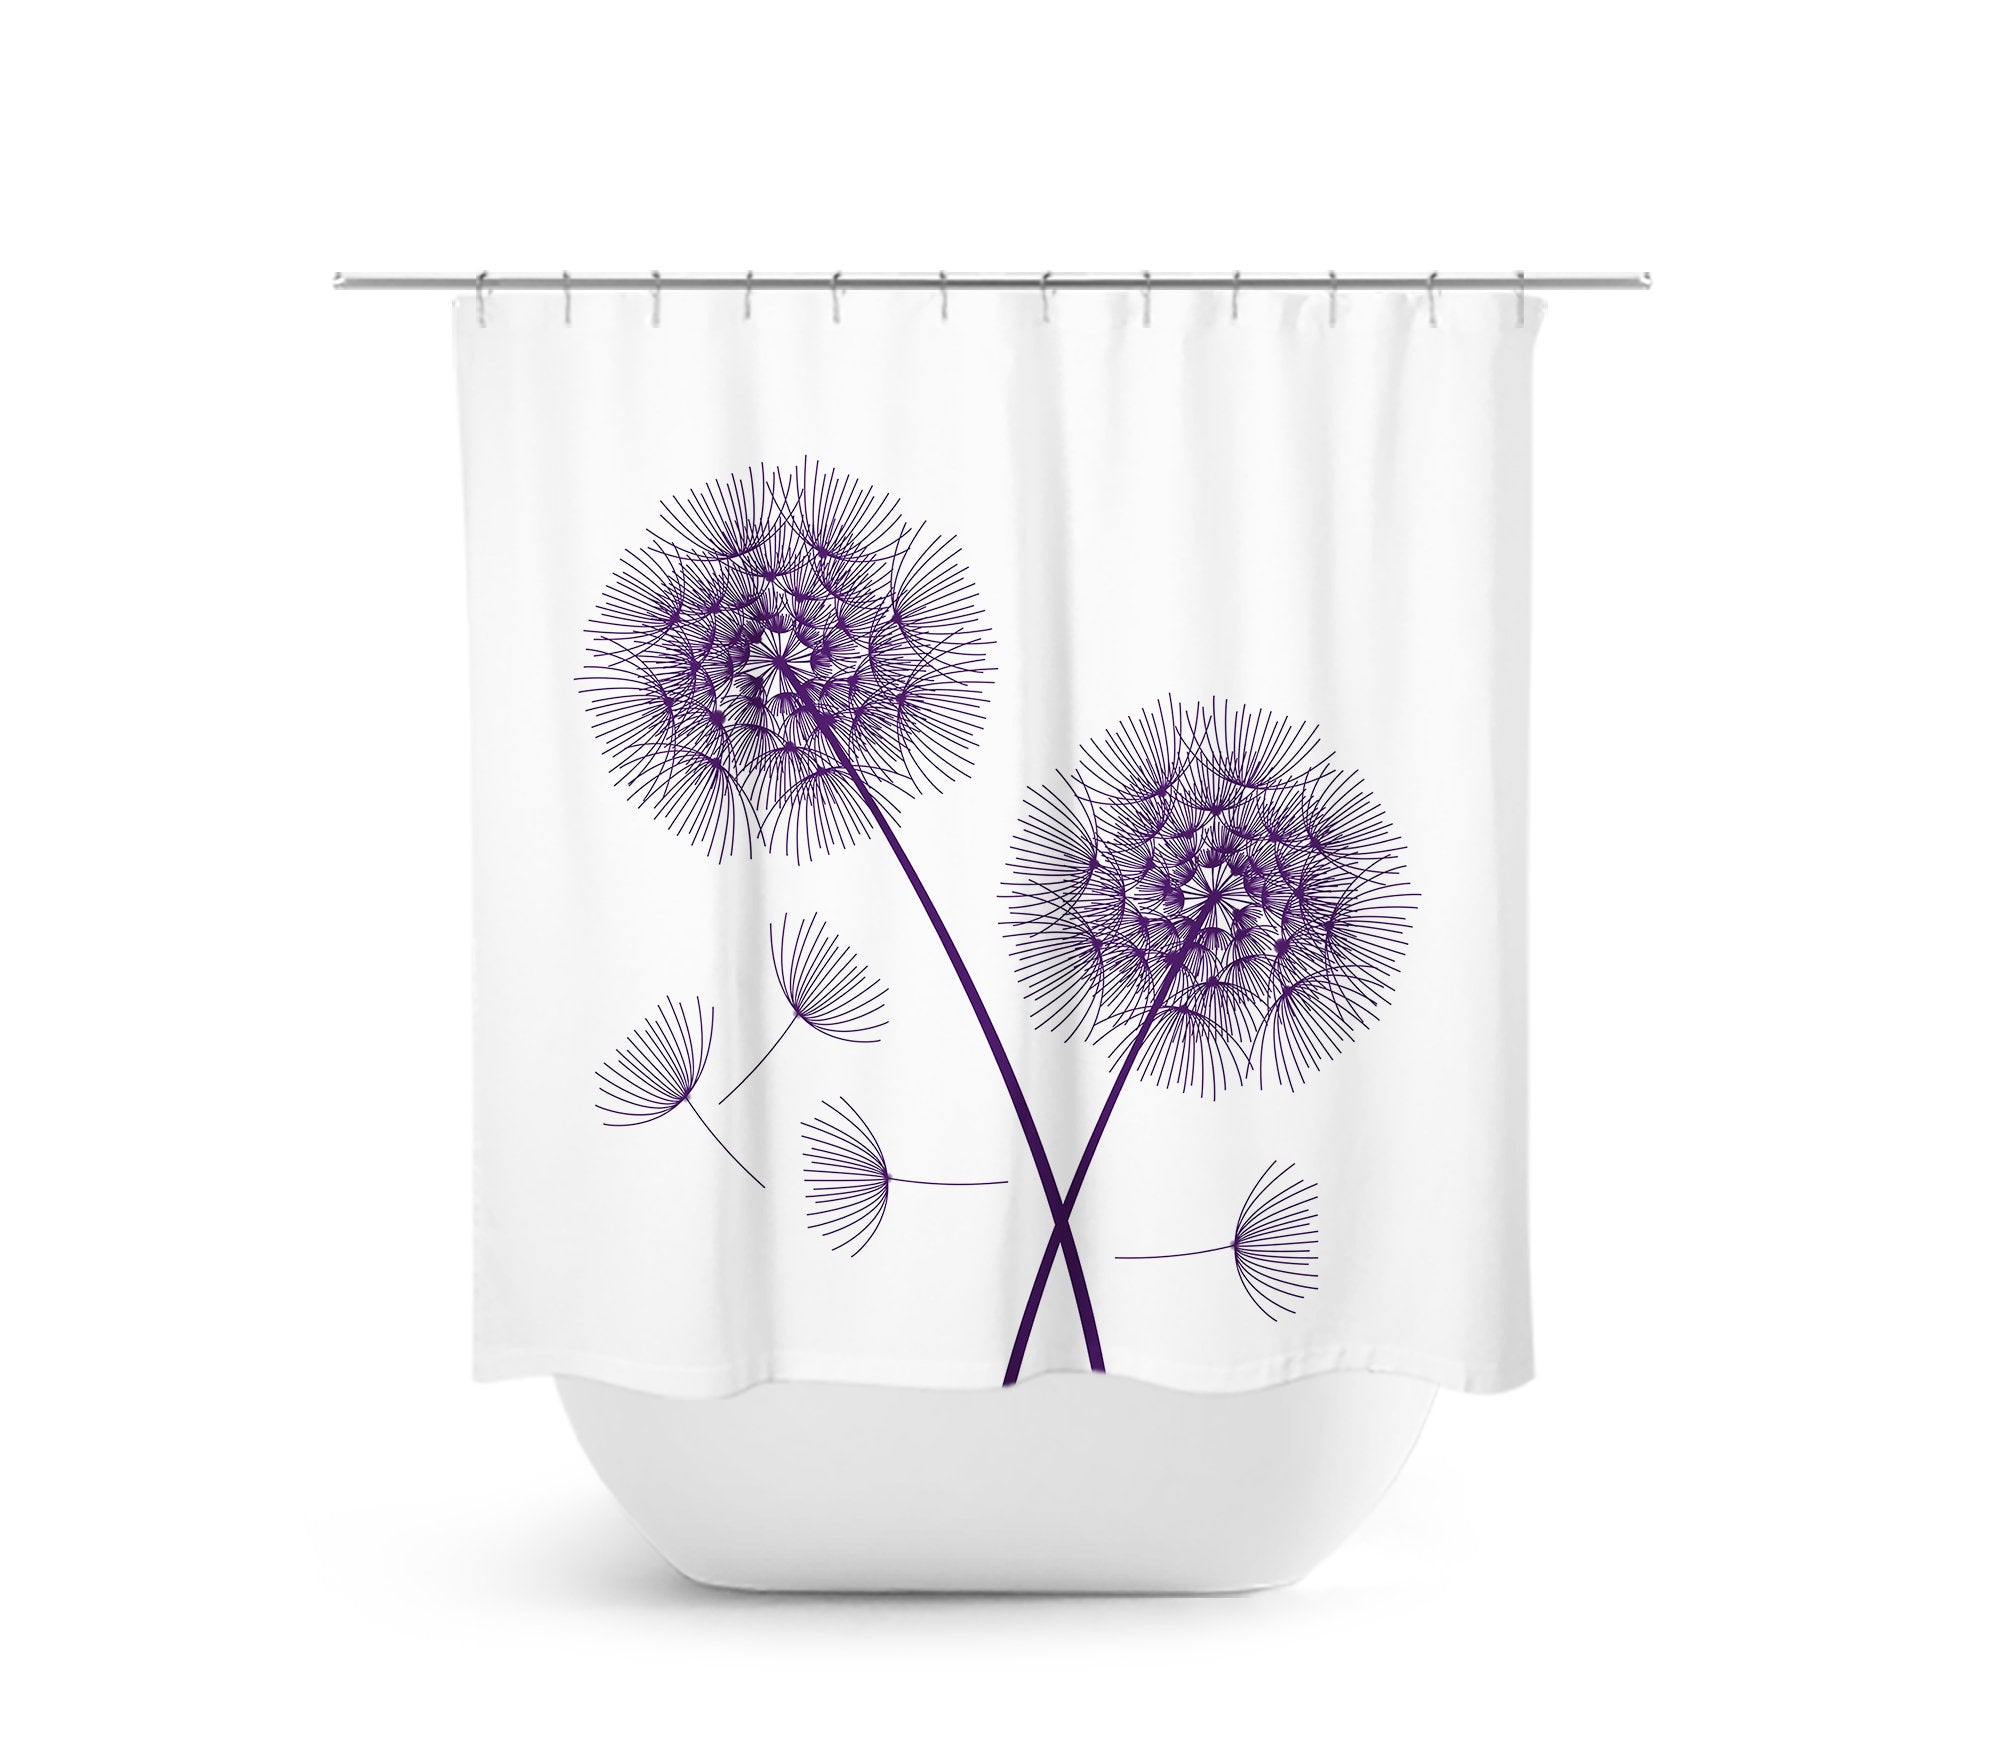 Minimalist White & Purple Dandelion Fabric Shower Curtain - SHOWER56